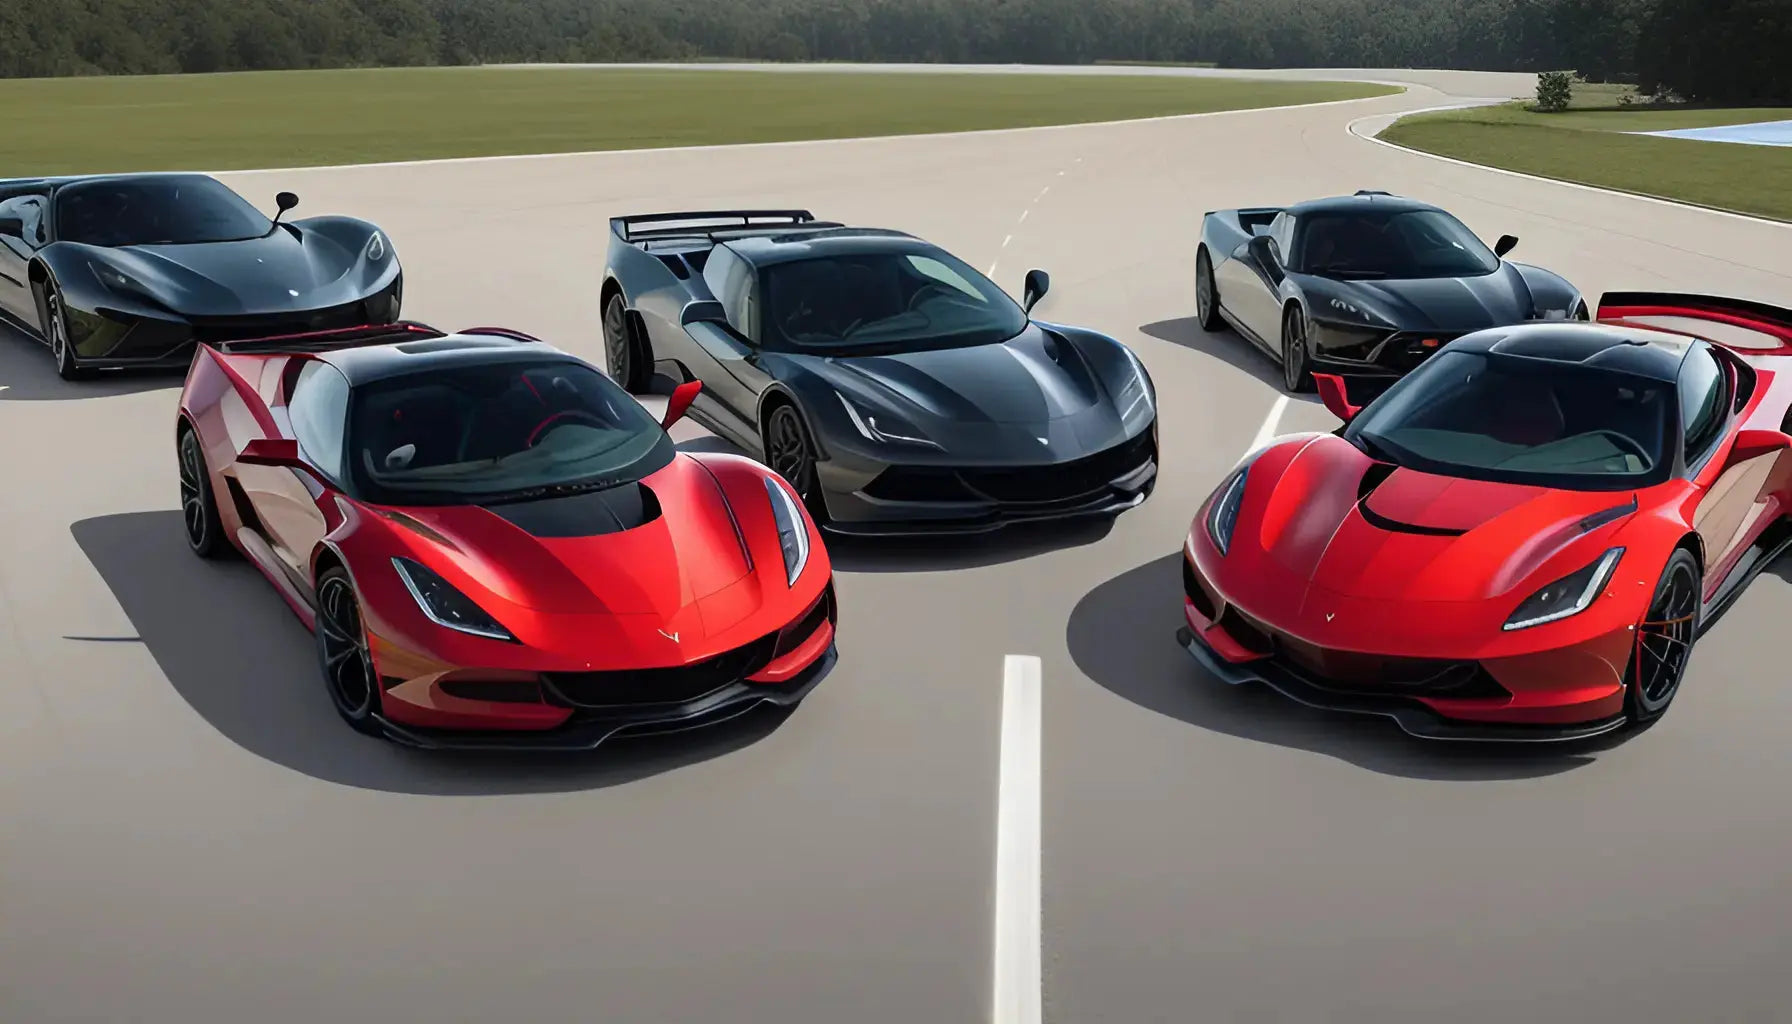 Corvette-compared-to-McLaren-Artura-compared-to-Ferrari-SF90-Stradale Rapidvehicles.com